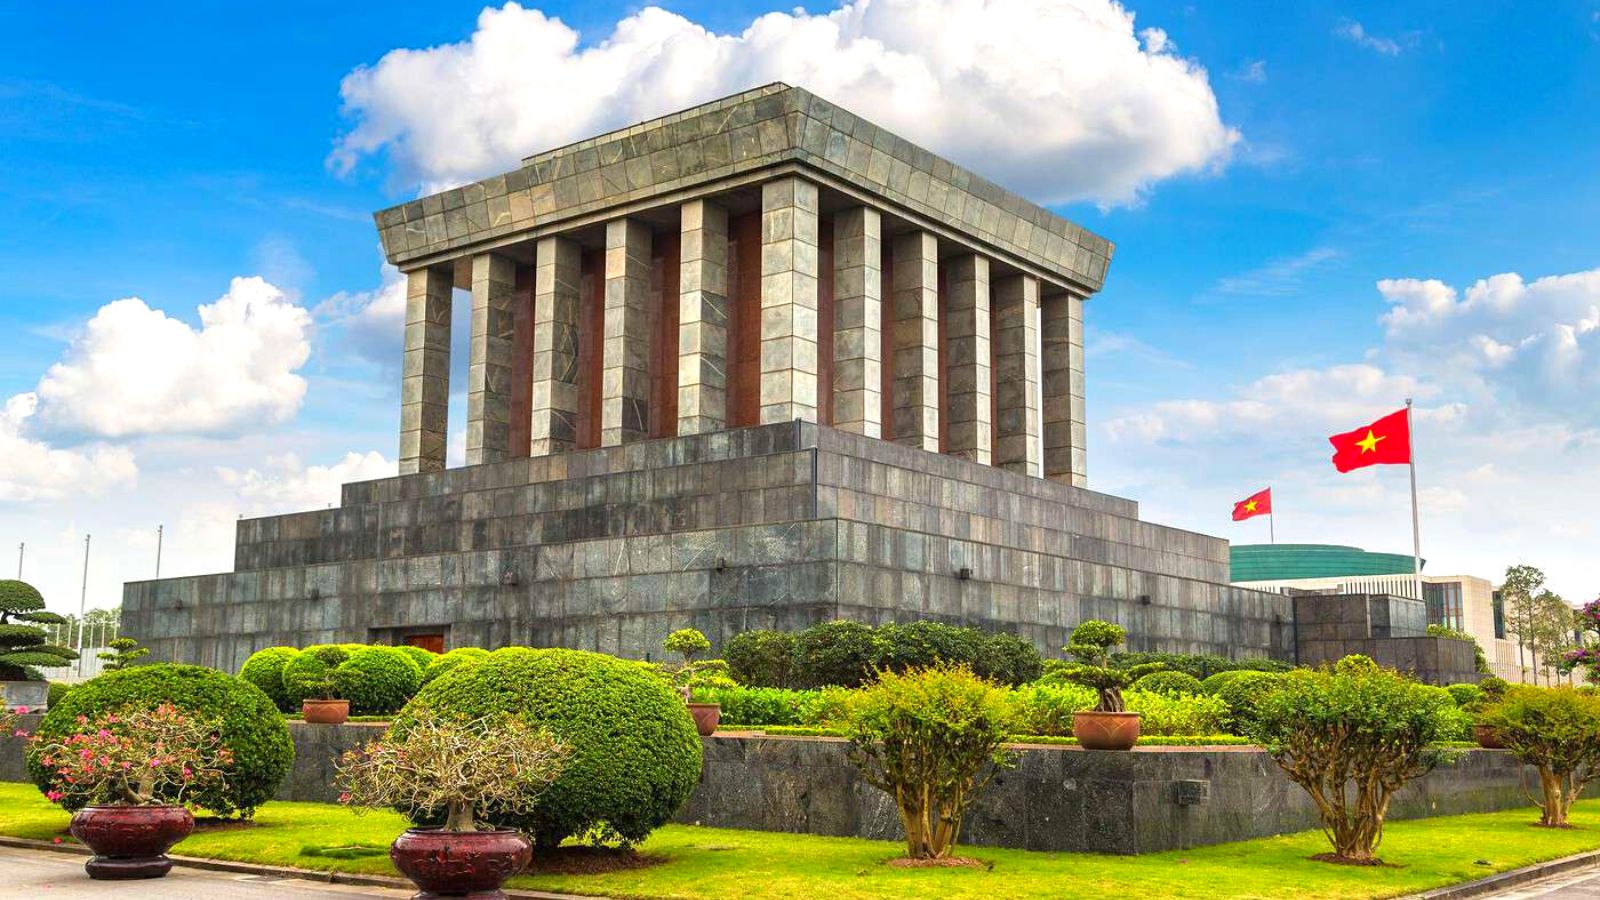 Stately Designed Ho Chi Minh Mausoleum